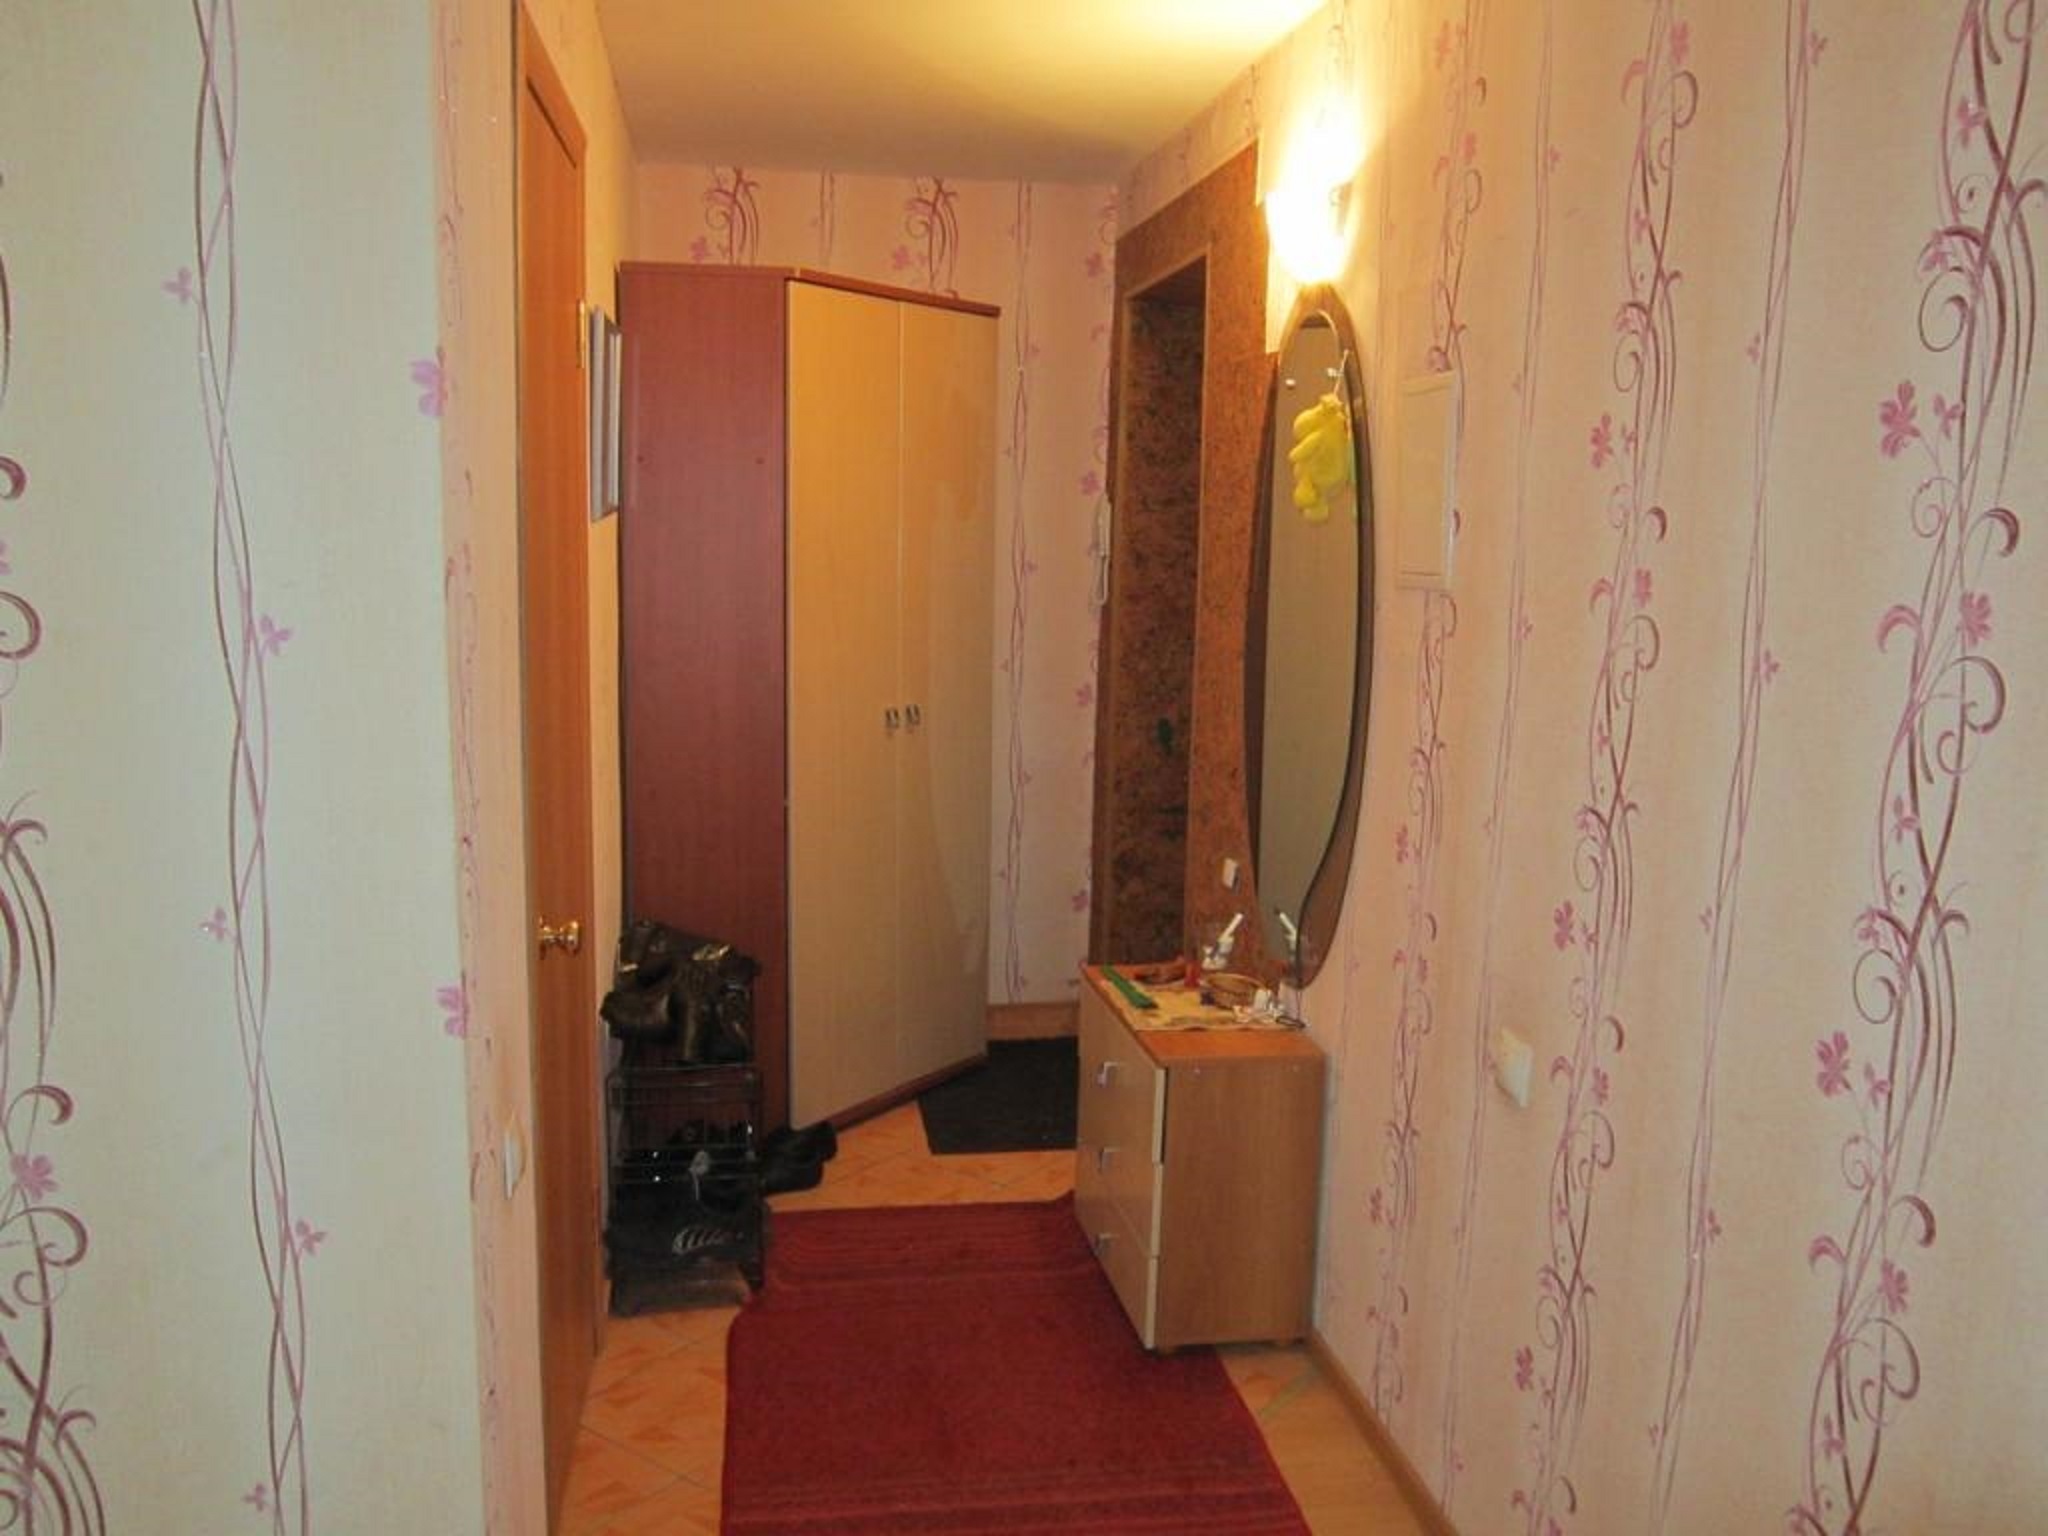 Яхрома дом номер 13 улица Ленина фото двухкомнатной квартиры